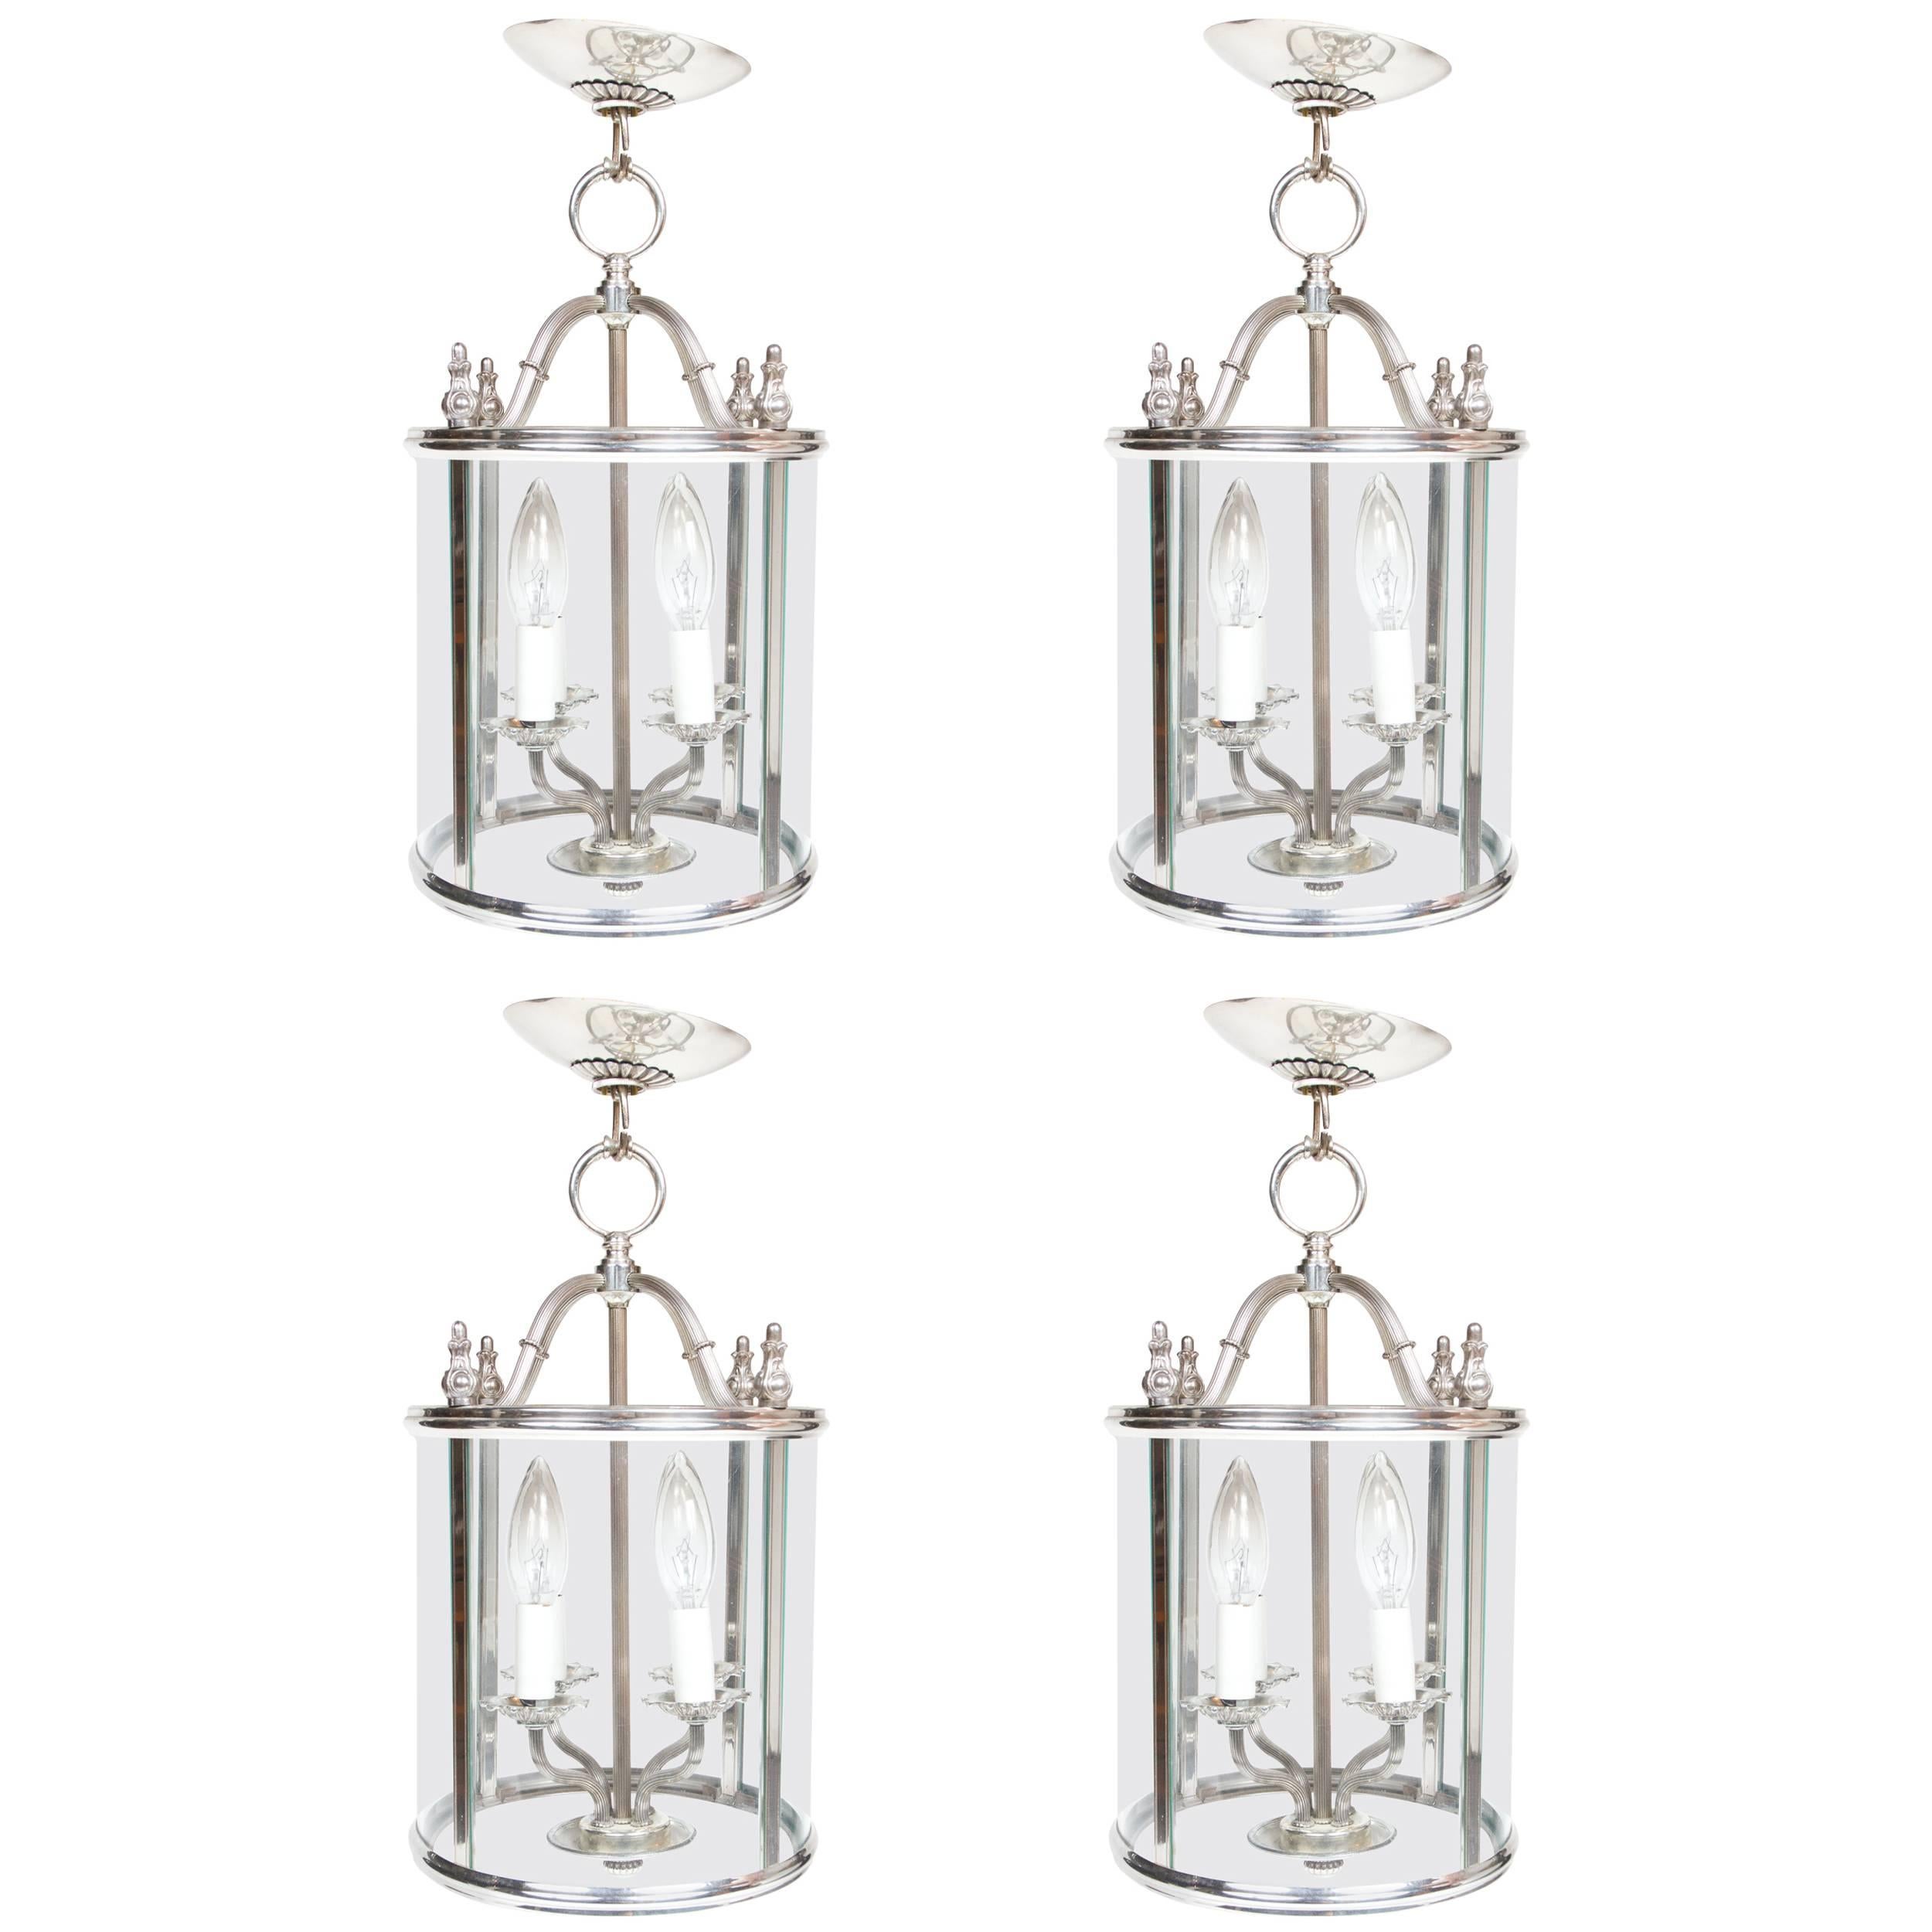 Set of Four Lanterns by Sciolari